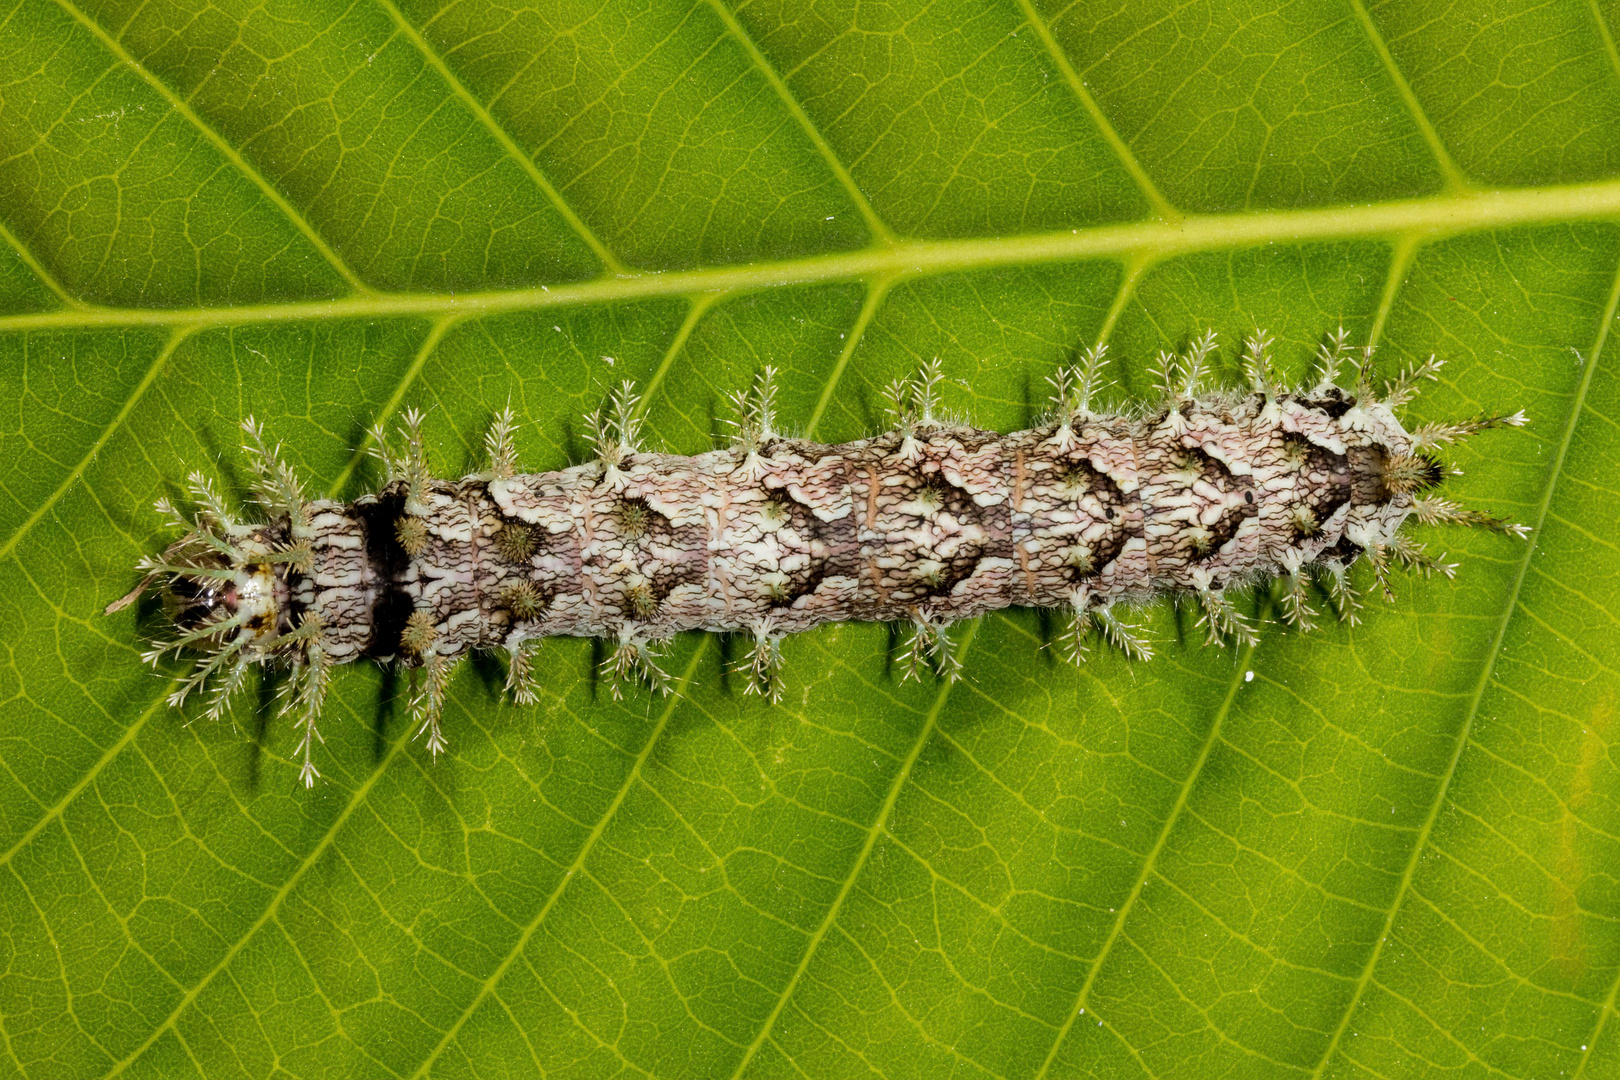 Saturniidae Caterpillar (Pseudodirphia sp.)